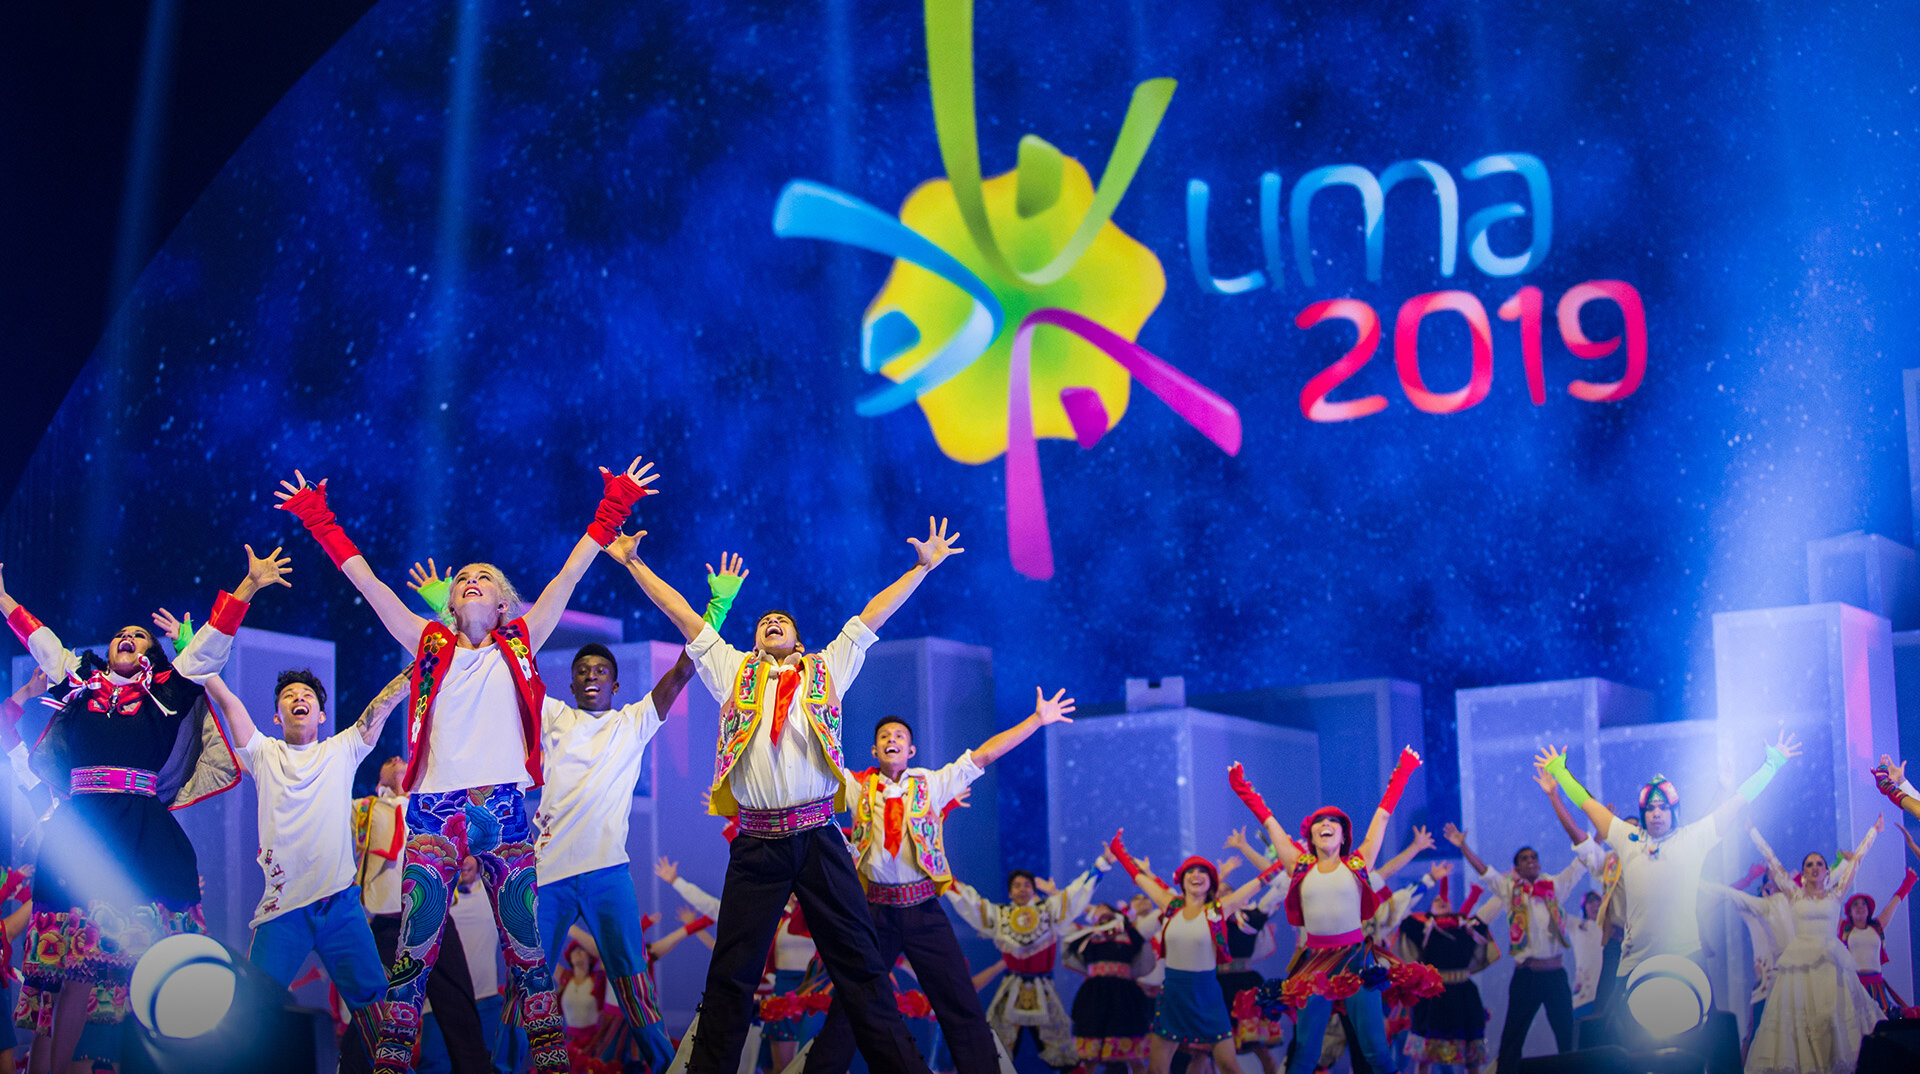 Lima 2019 Pan American Games Handover